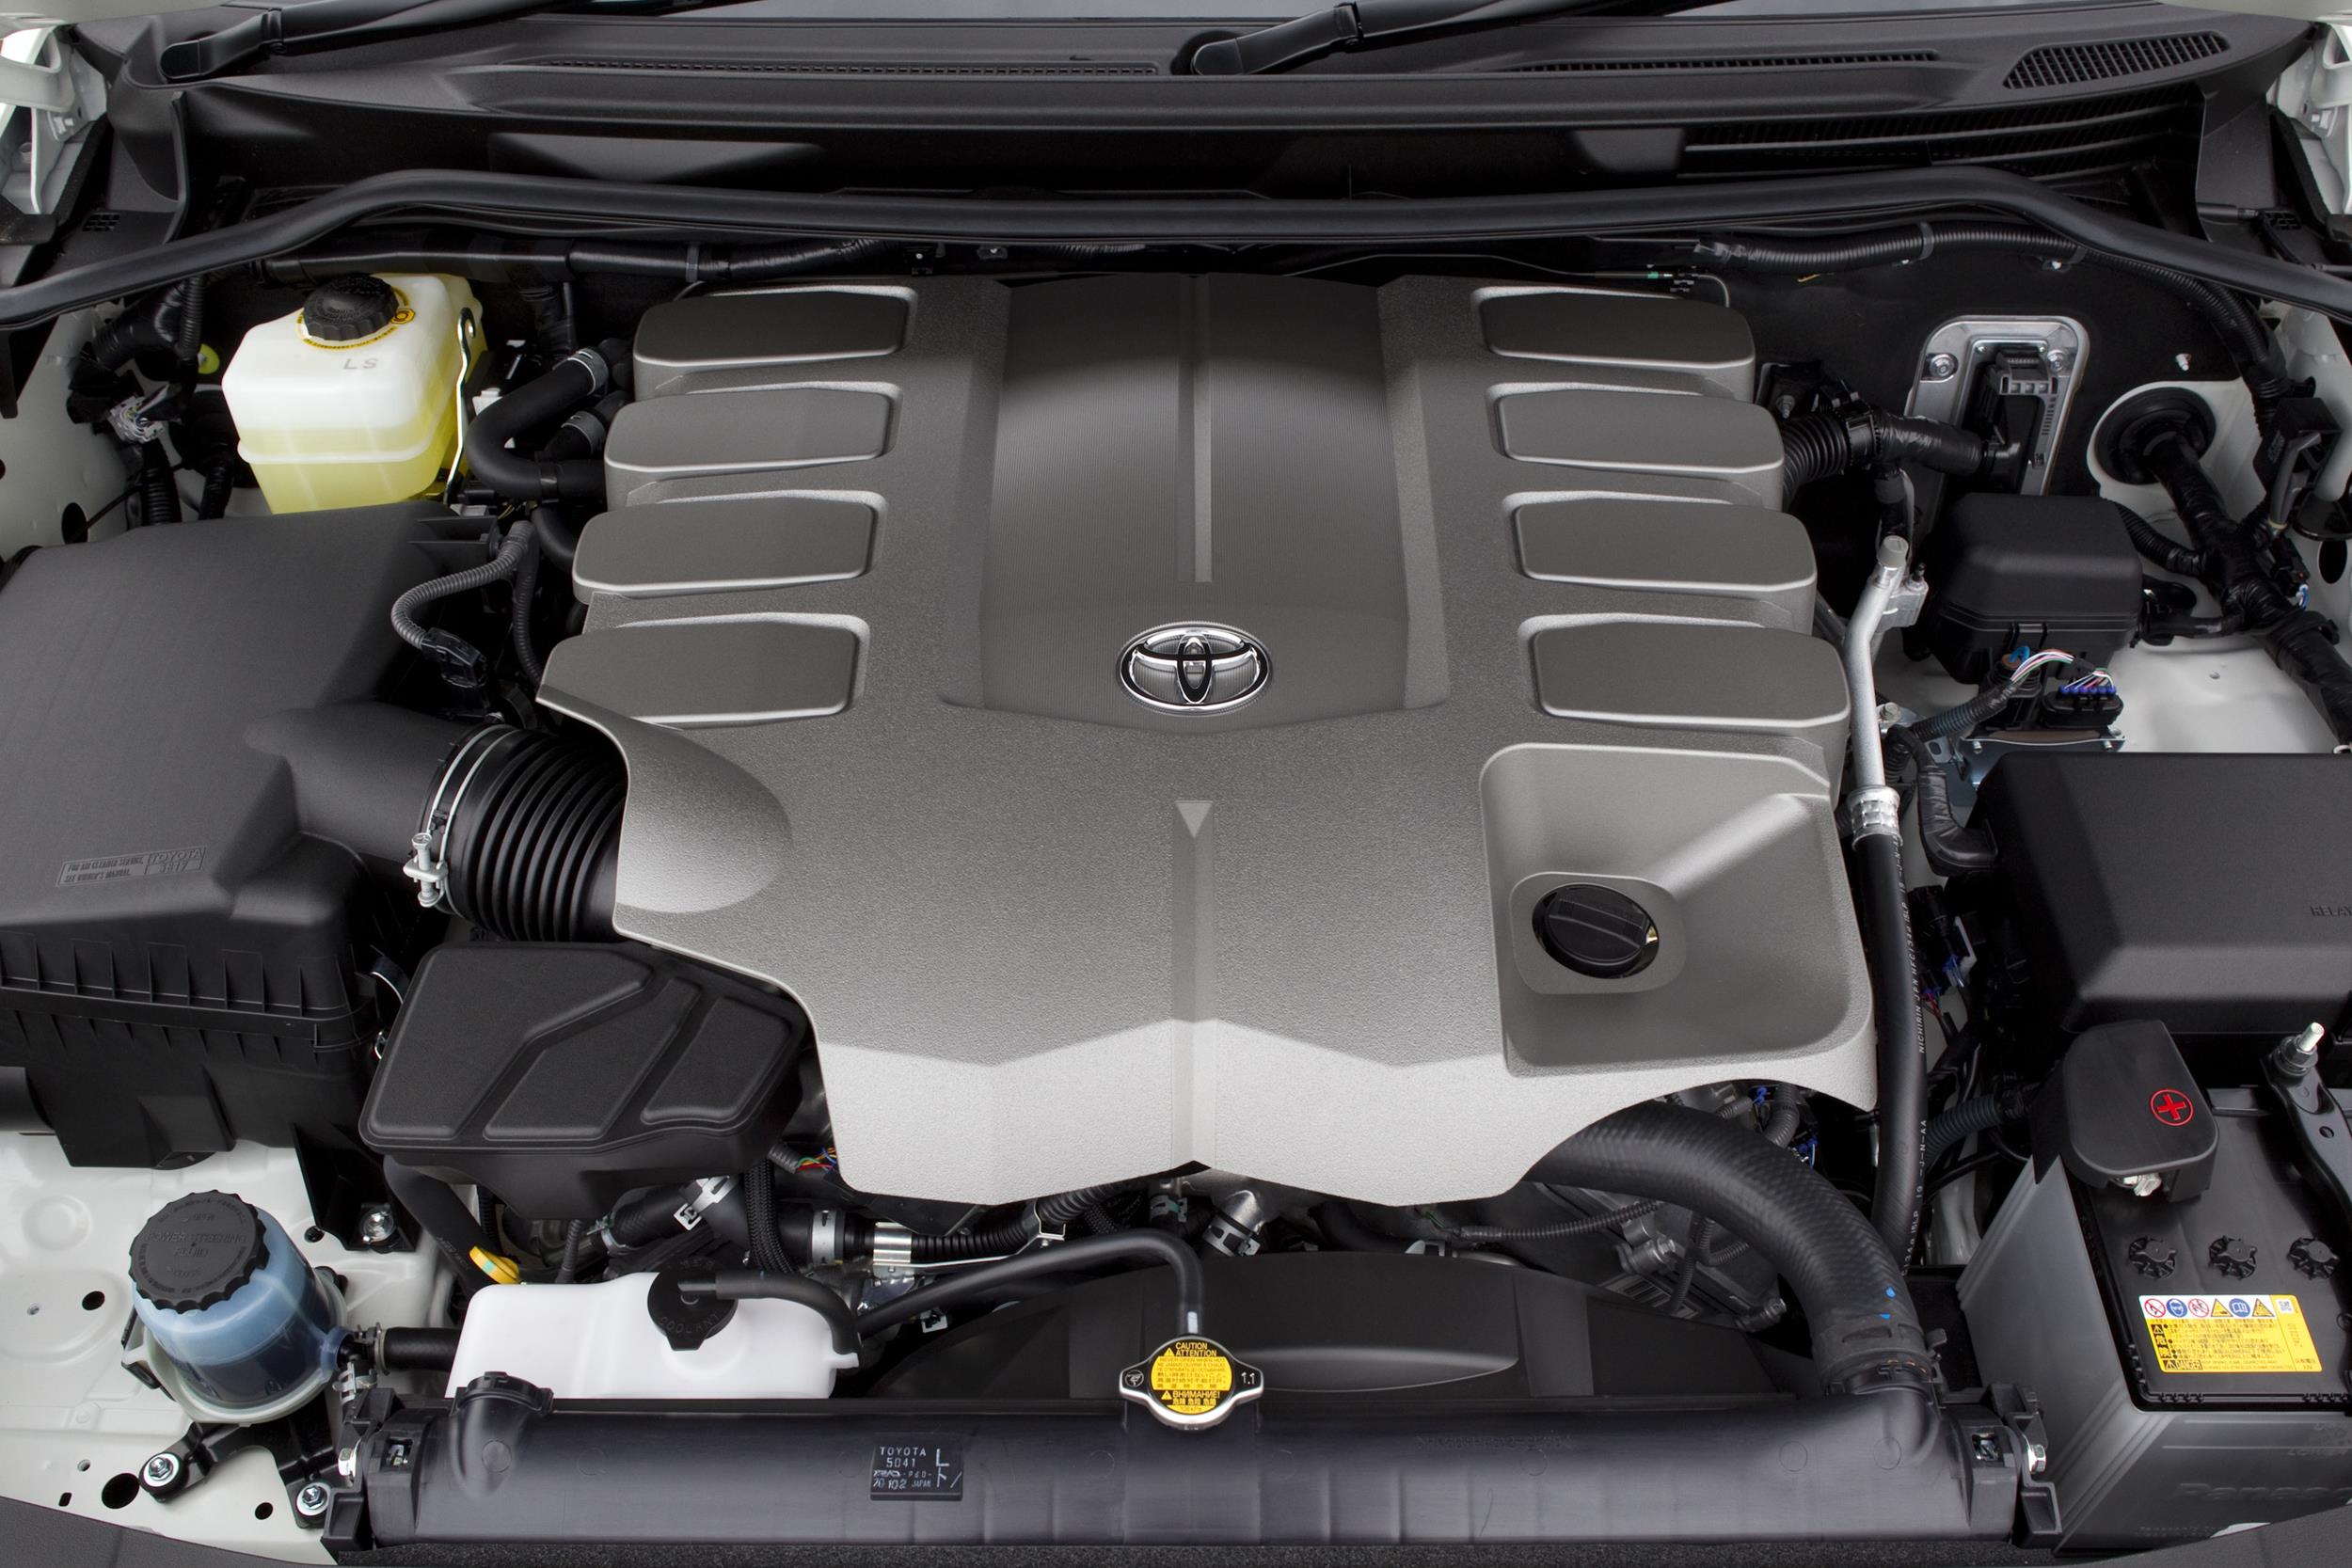 1UR-FE Toyota engine